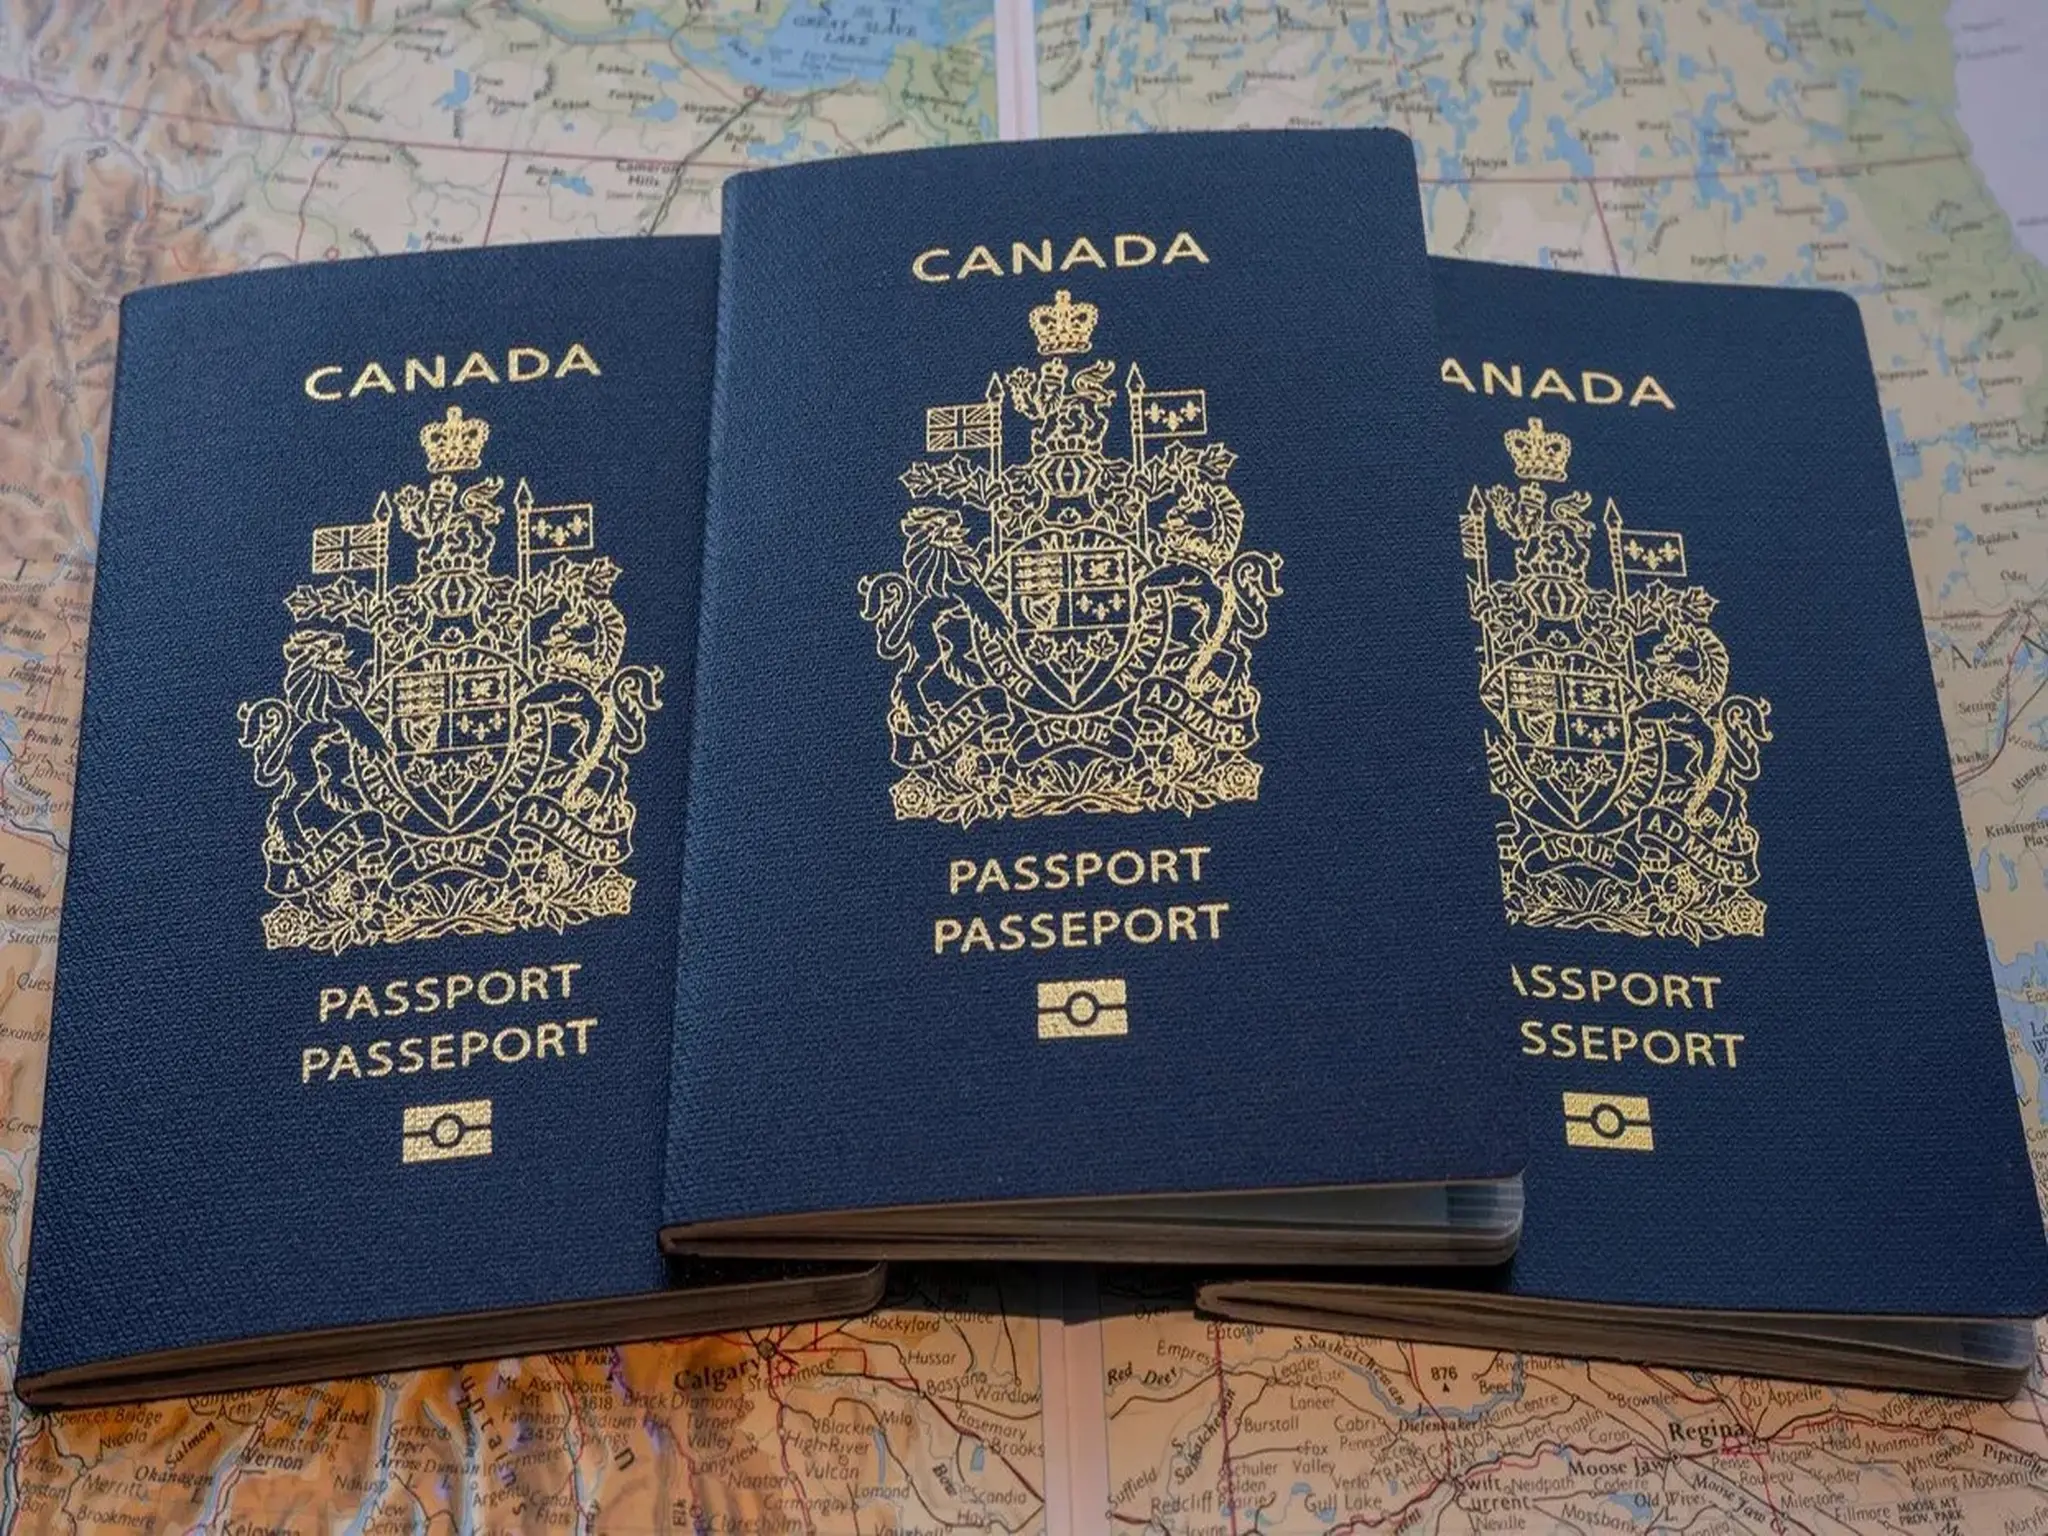 Canada: Permits online passport renewals